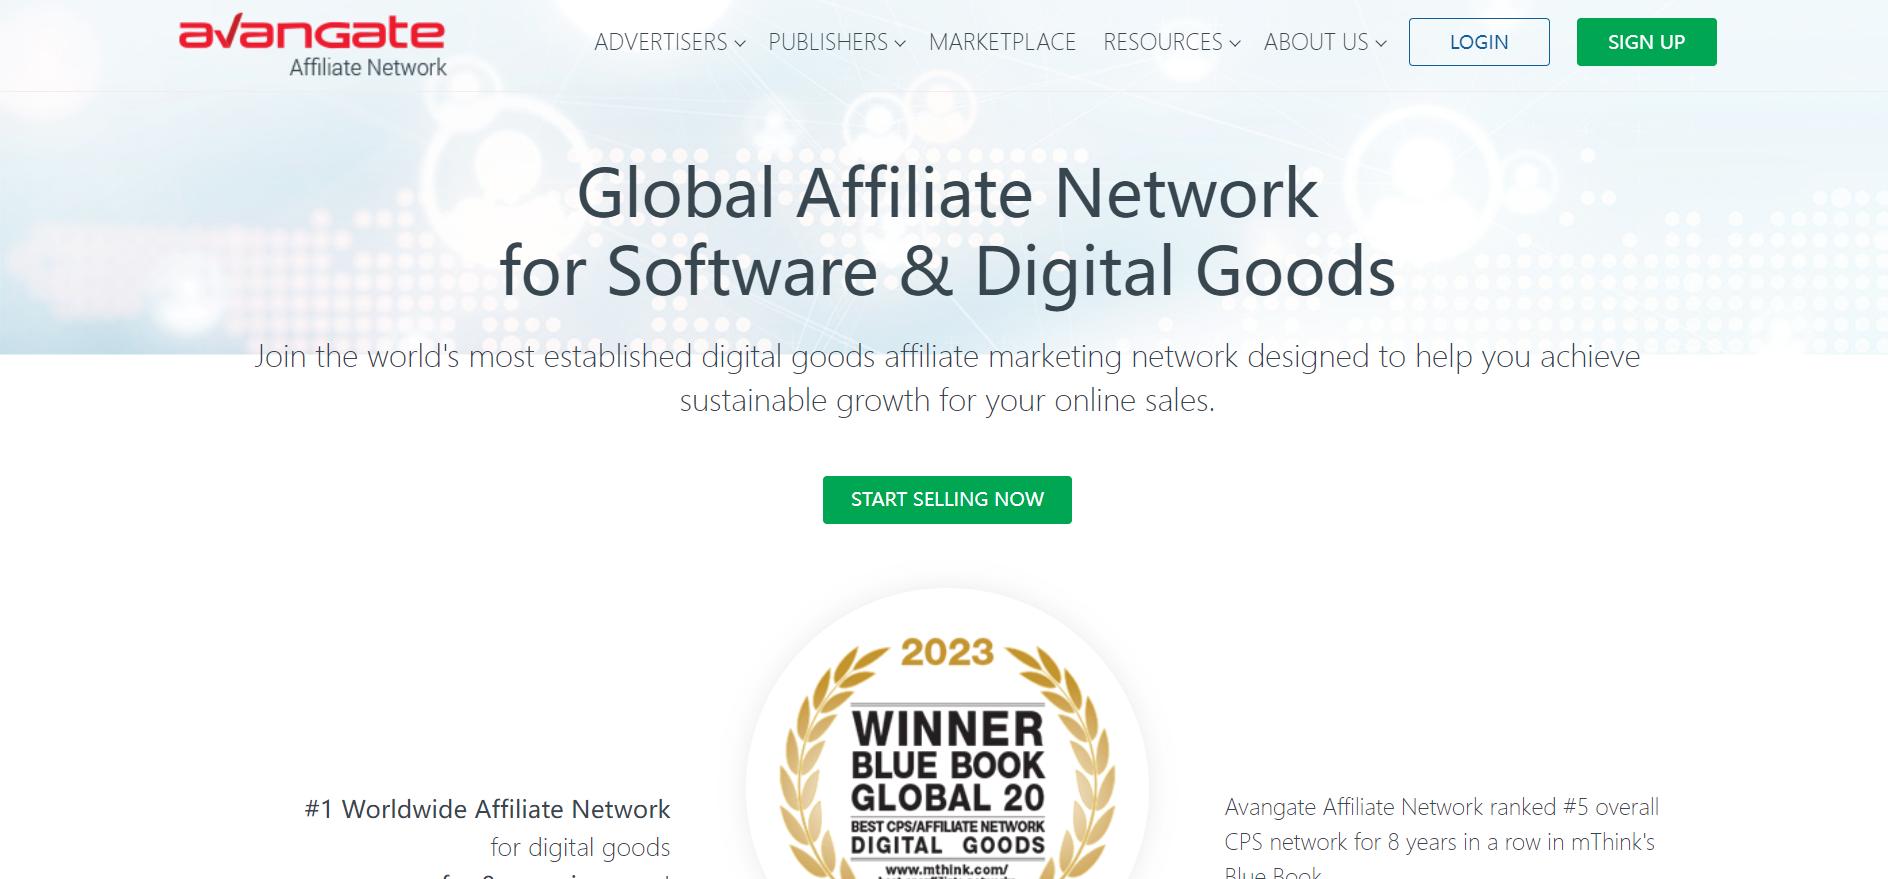 Avangate Affiliate Network官方网站界面